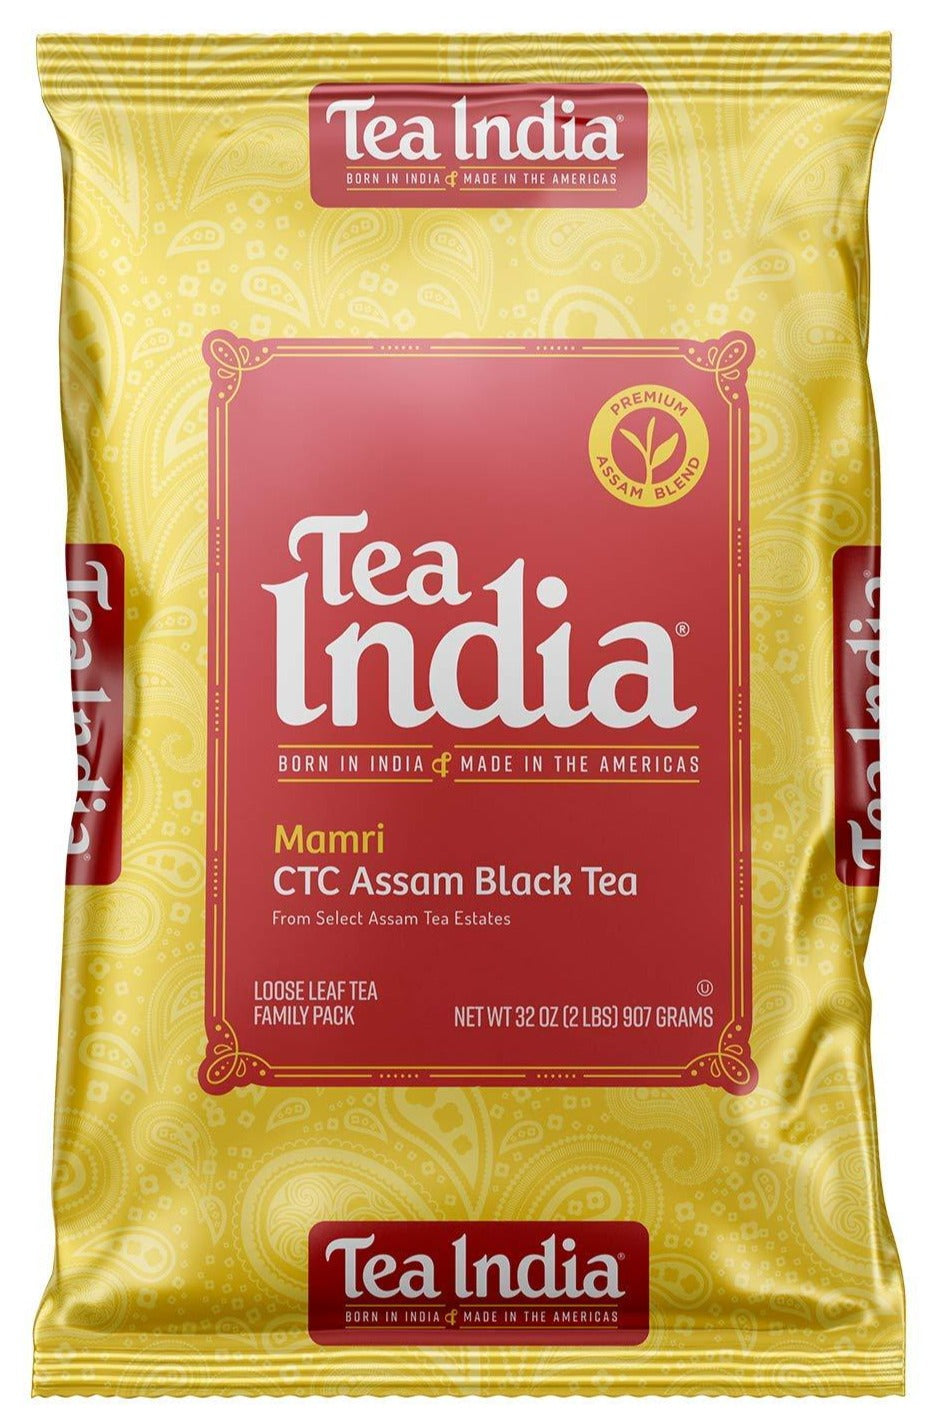 Mamri CTC Assam Black Tea